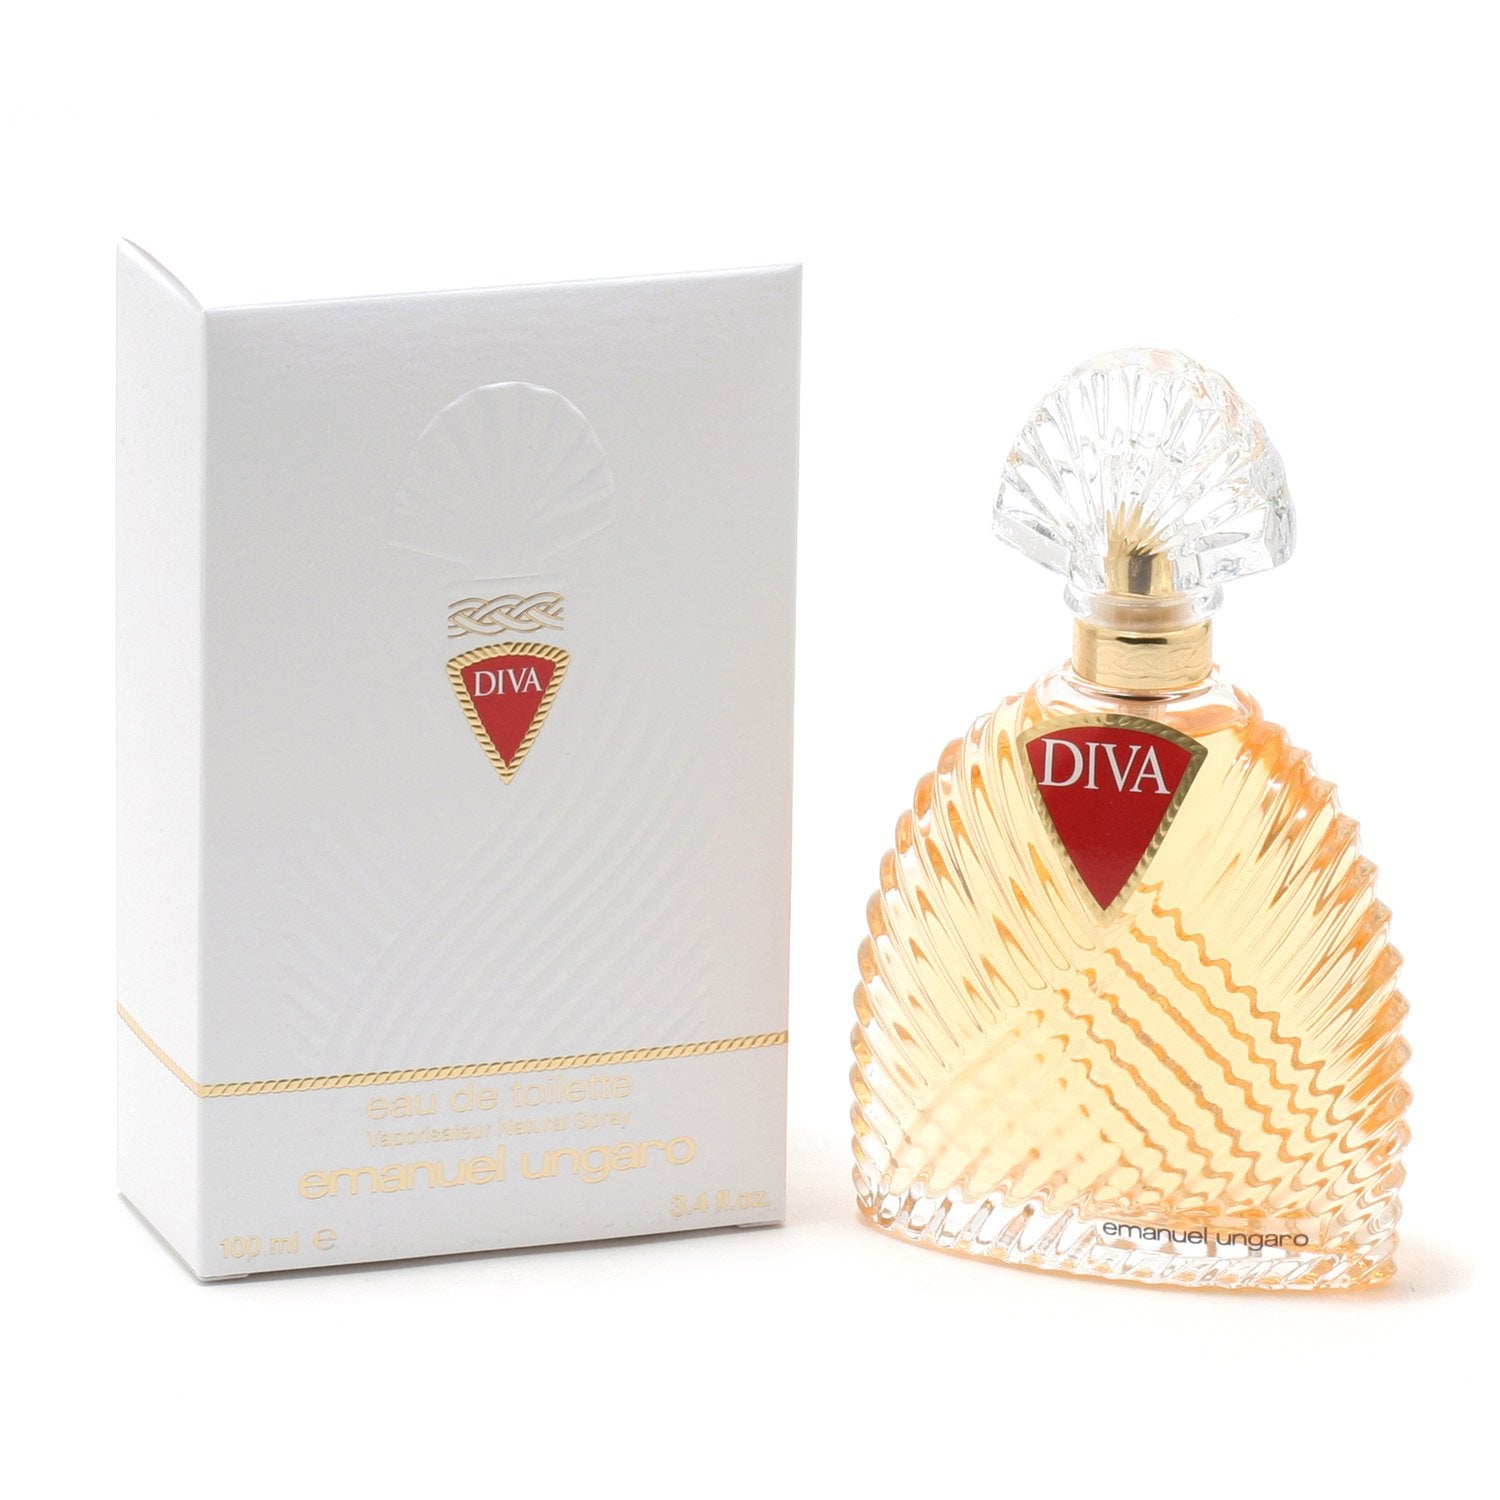 Perfume - DIVA FOR WOMEN BY UNGARO - EAU DE TOILETTE SPRAY, 3.4 OZ